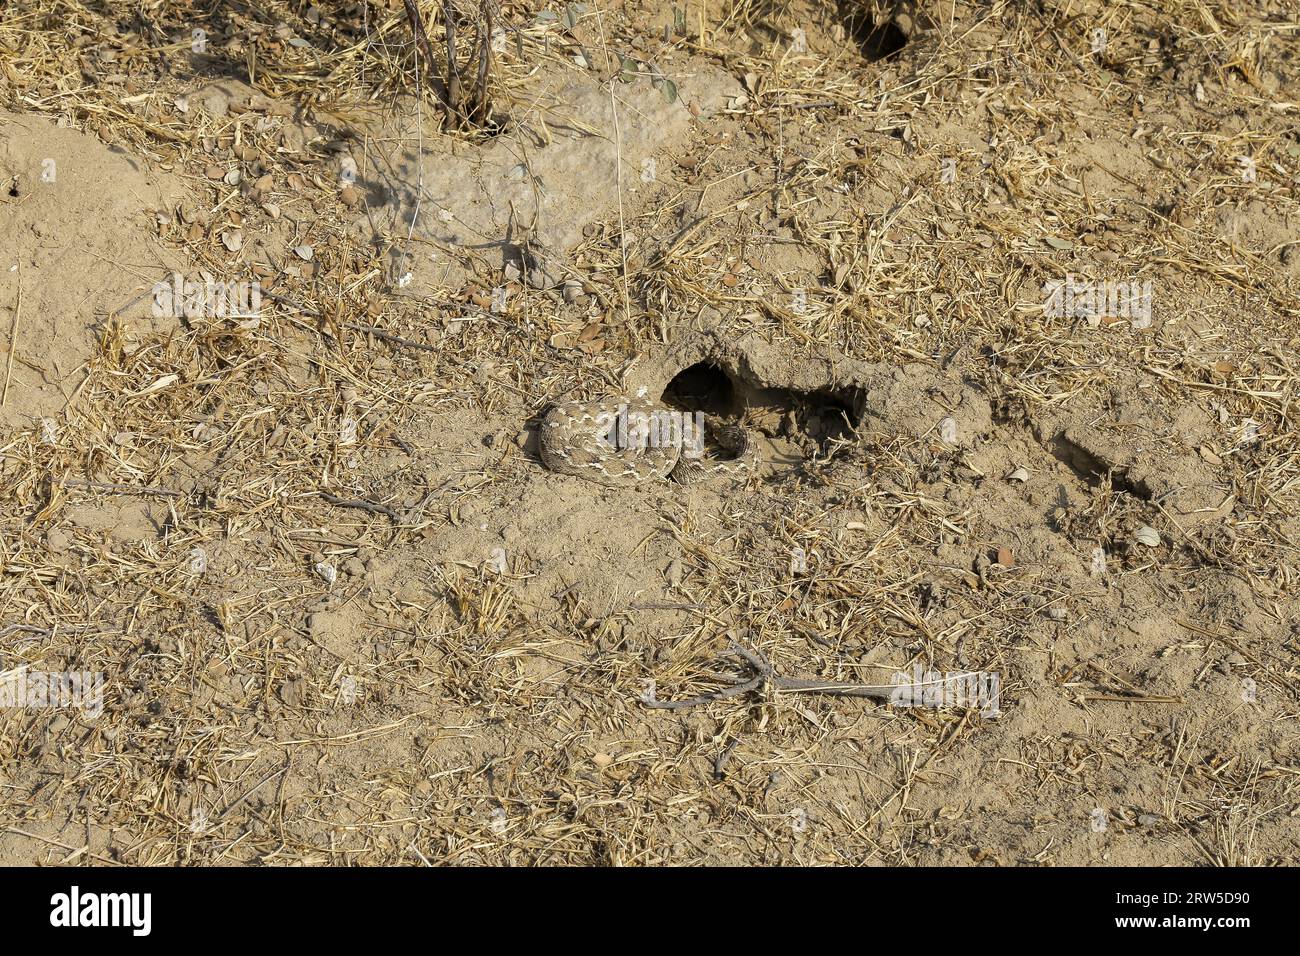 Close-up of a Sochurek's Saw-scaled Viper  (Echis carinatus) in a arid landscape Stock Photo